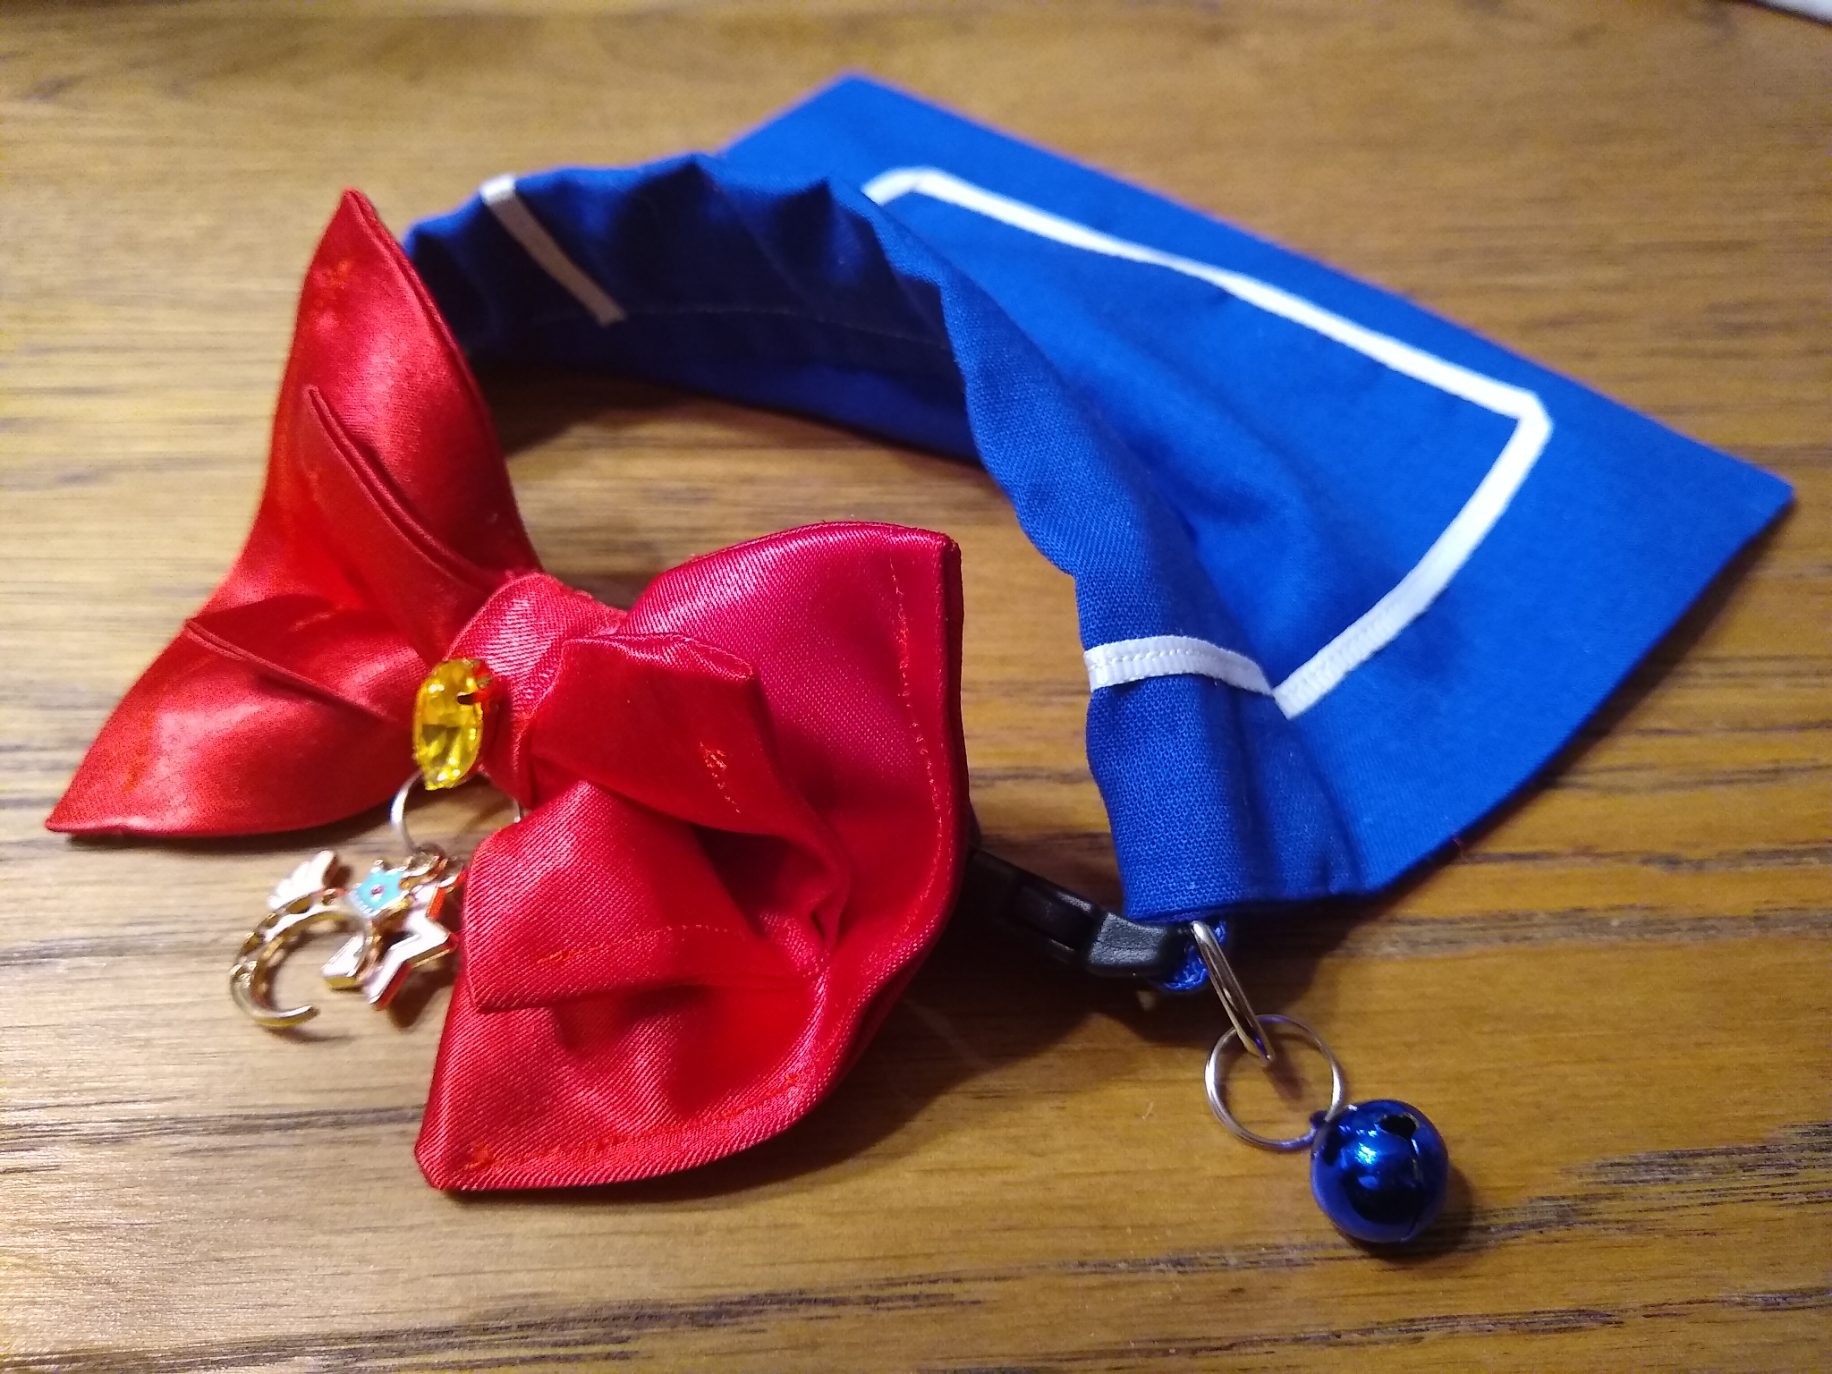 Oscar Vega on X: Mom made us a Sailor Moon collar for our cat and